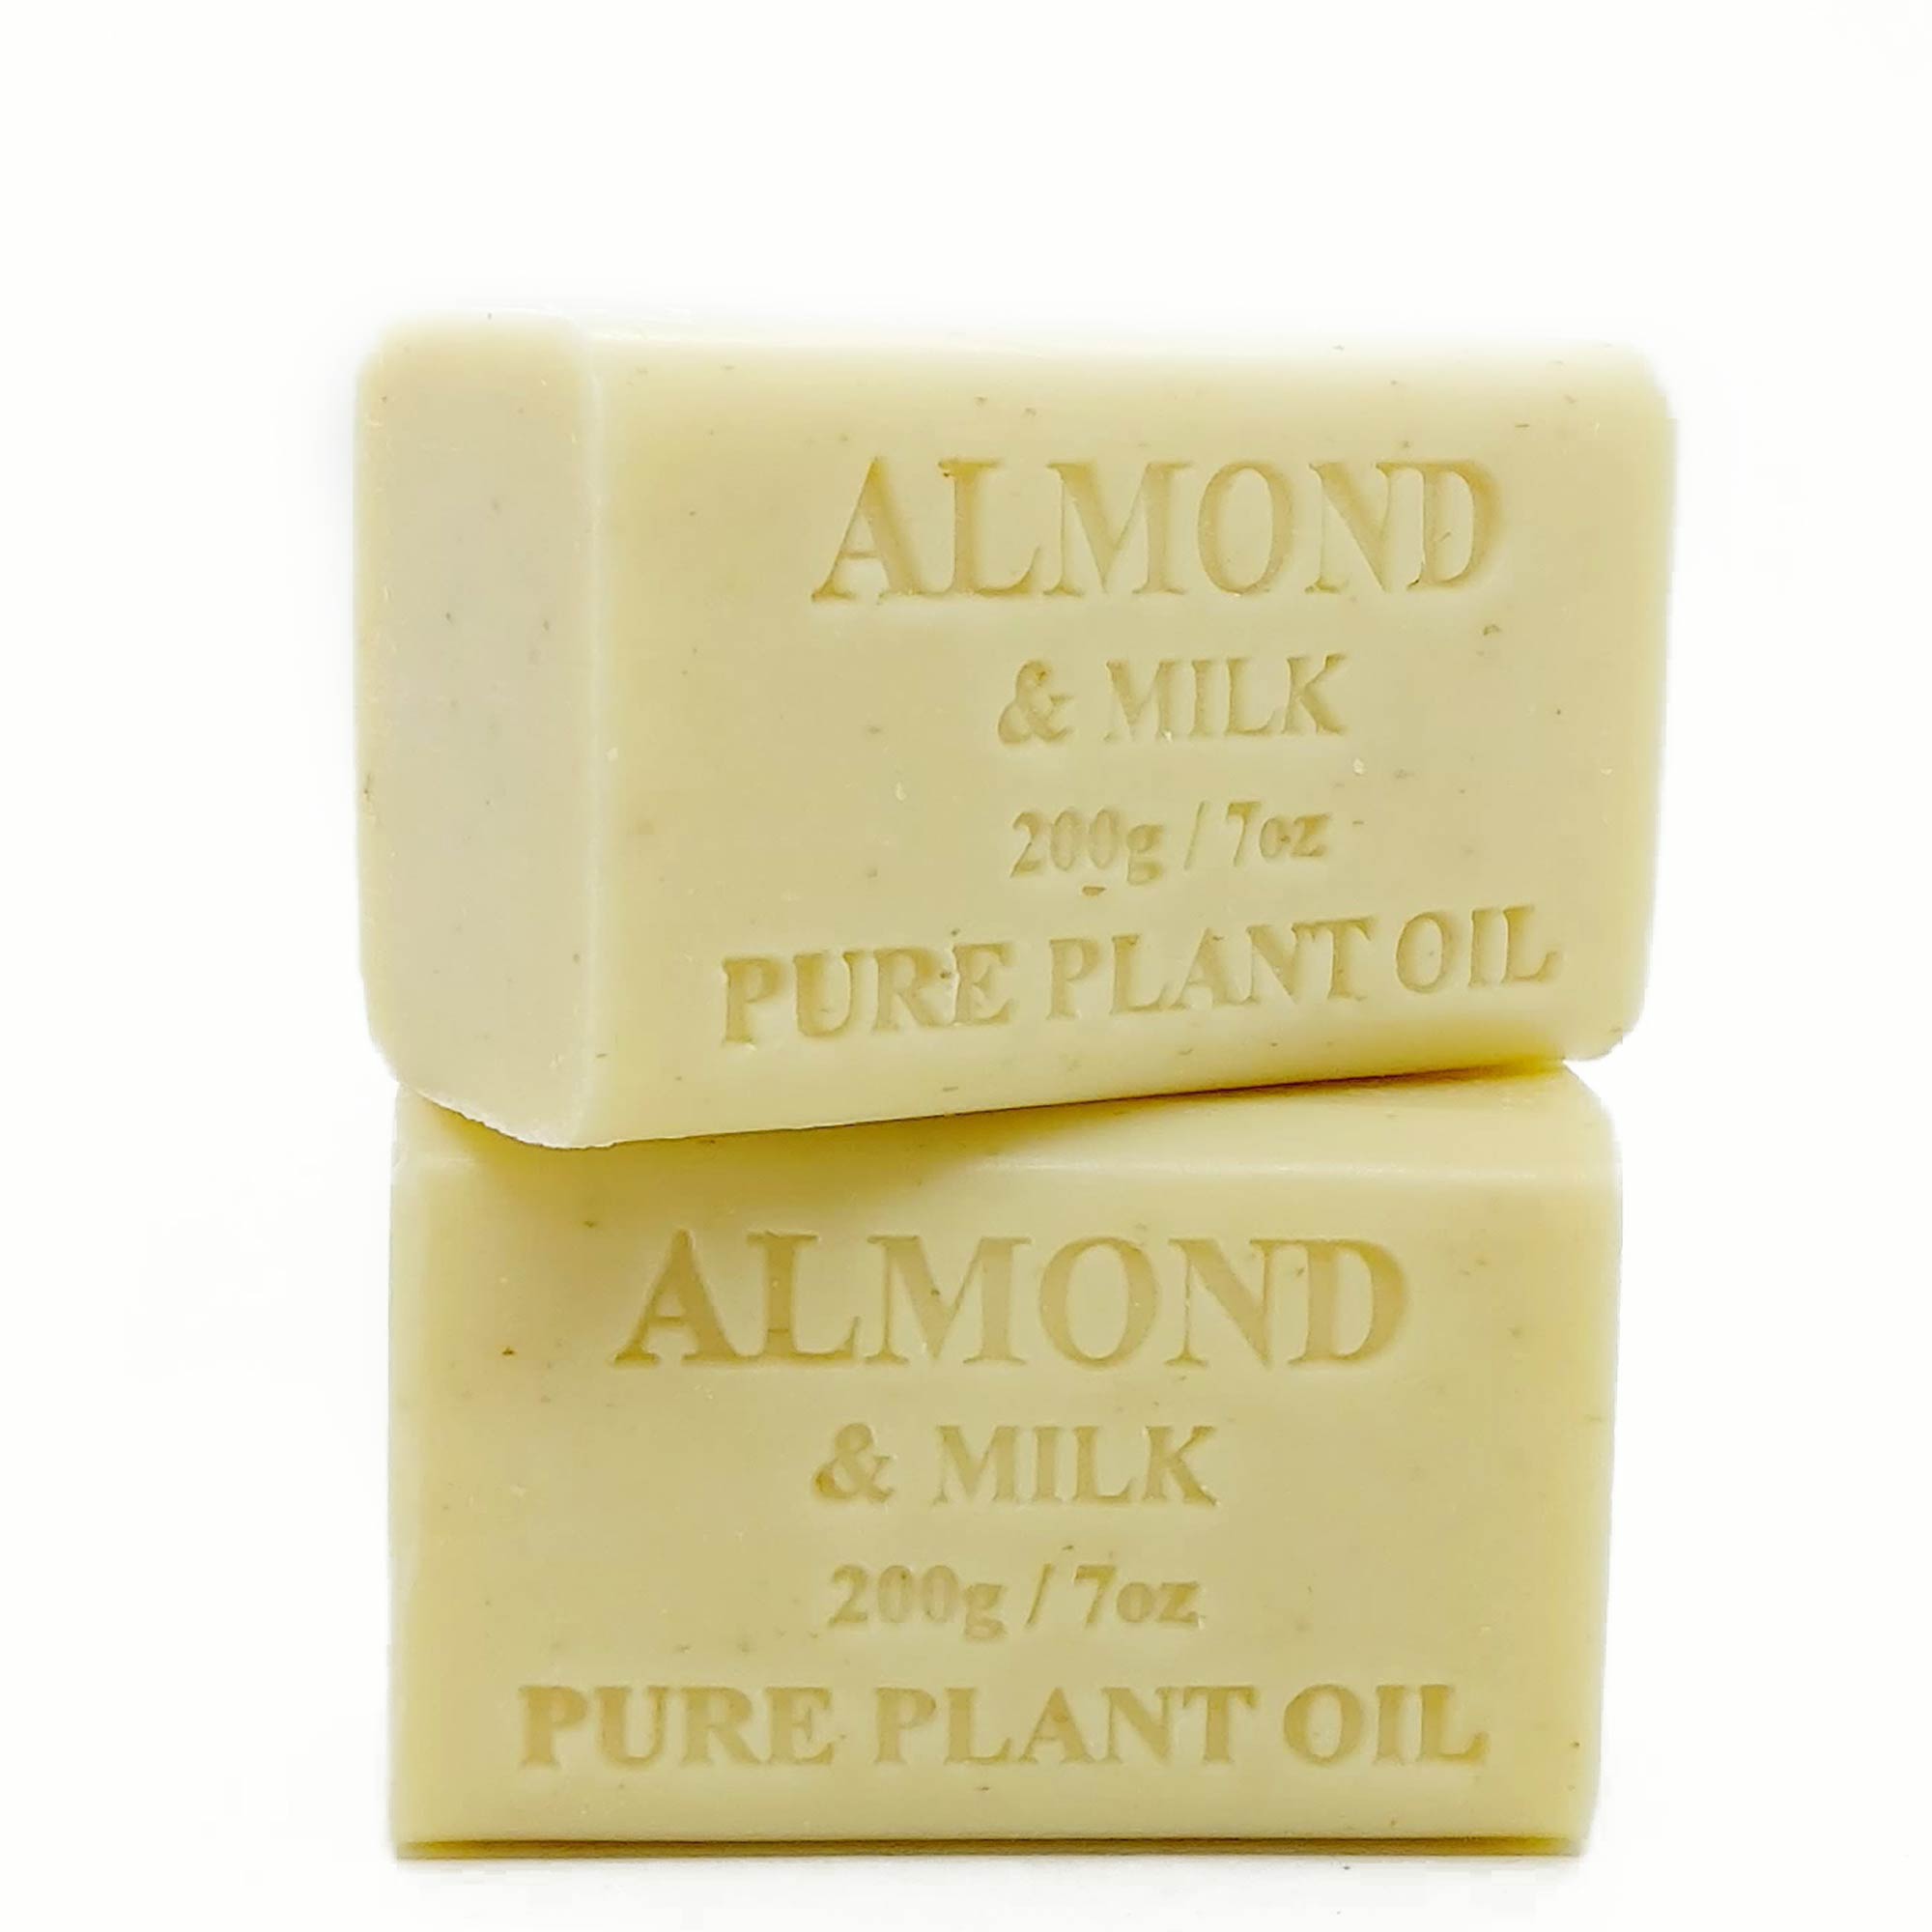 [2x 200g] Plant Oil Soap Almond and Milk Scent Pure Vegetable Base Bar Australian